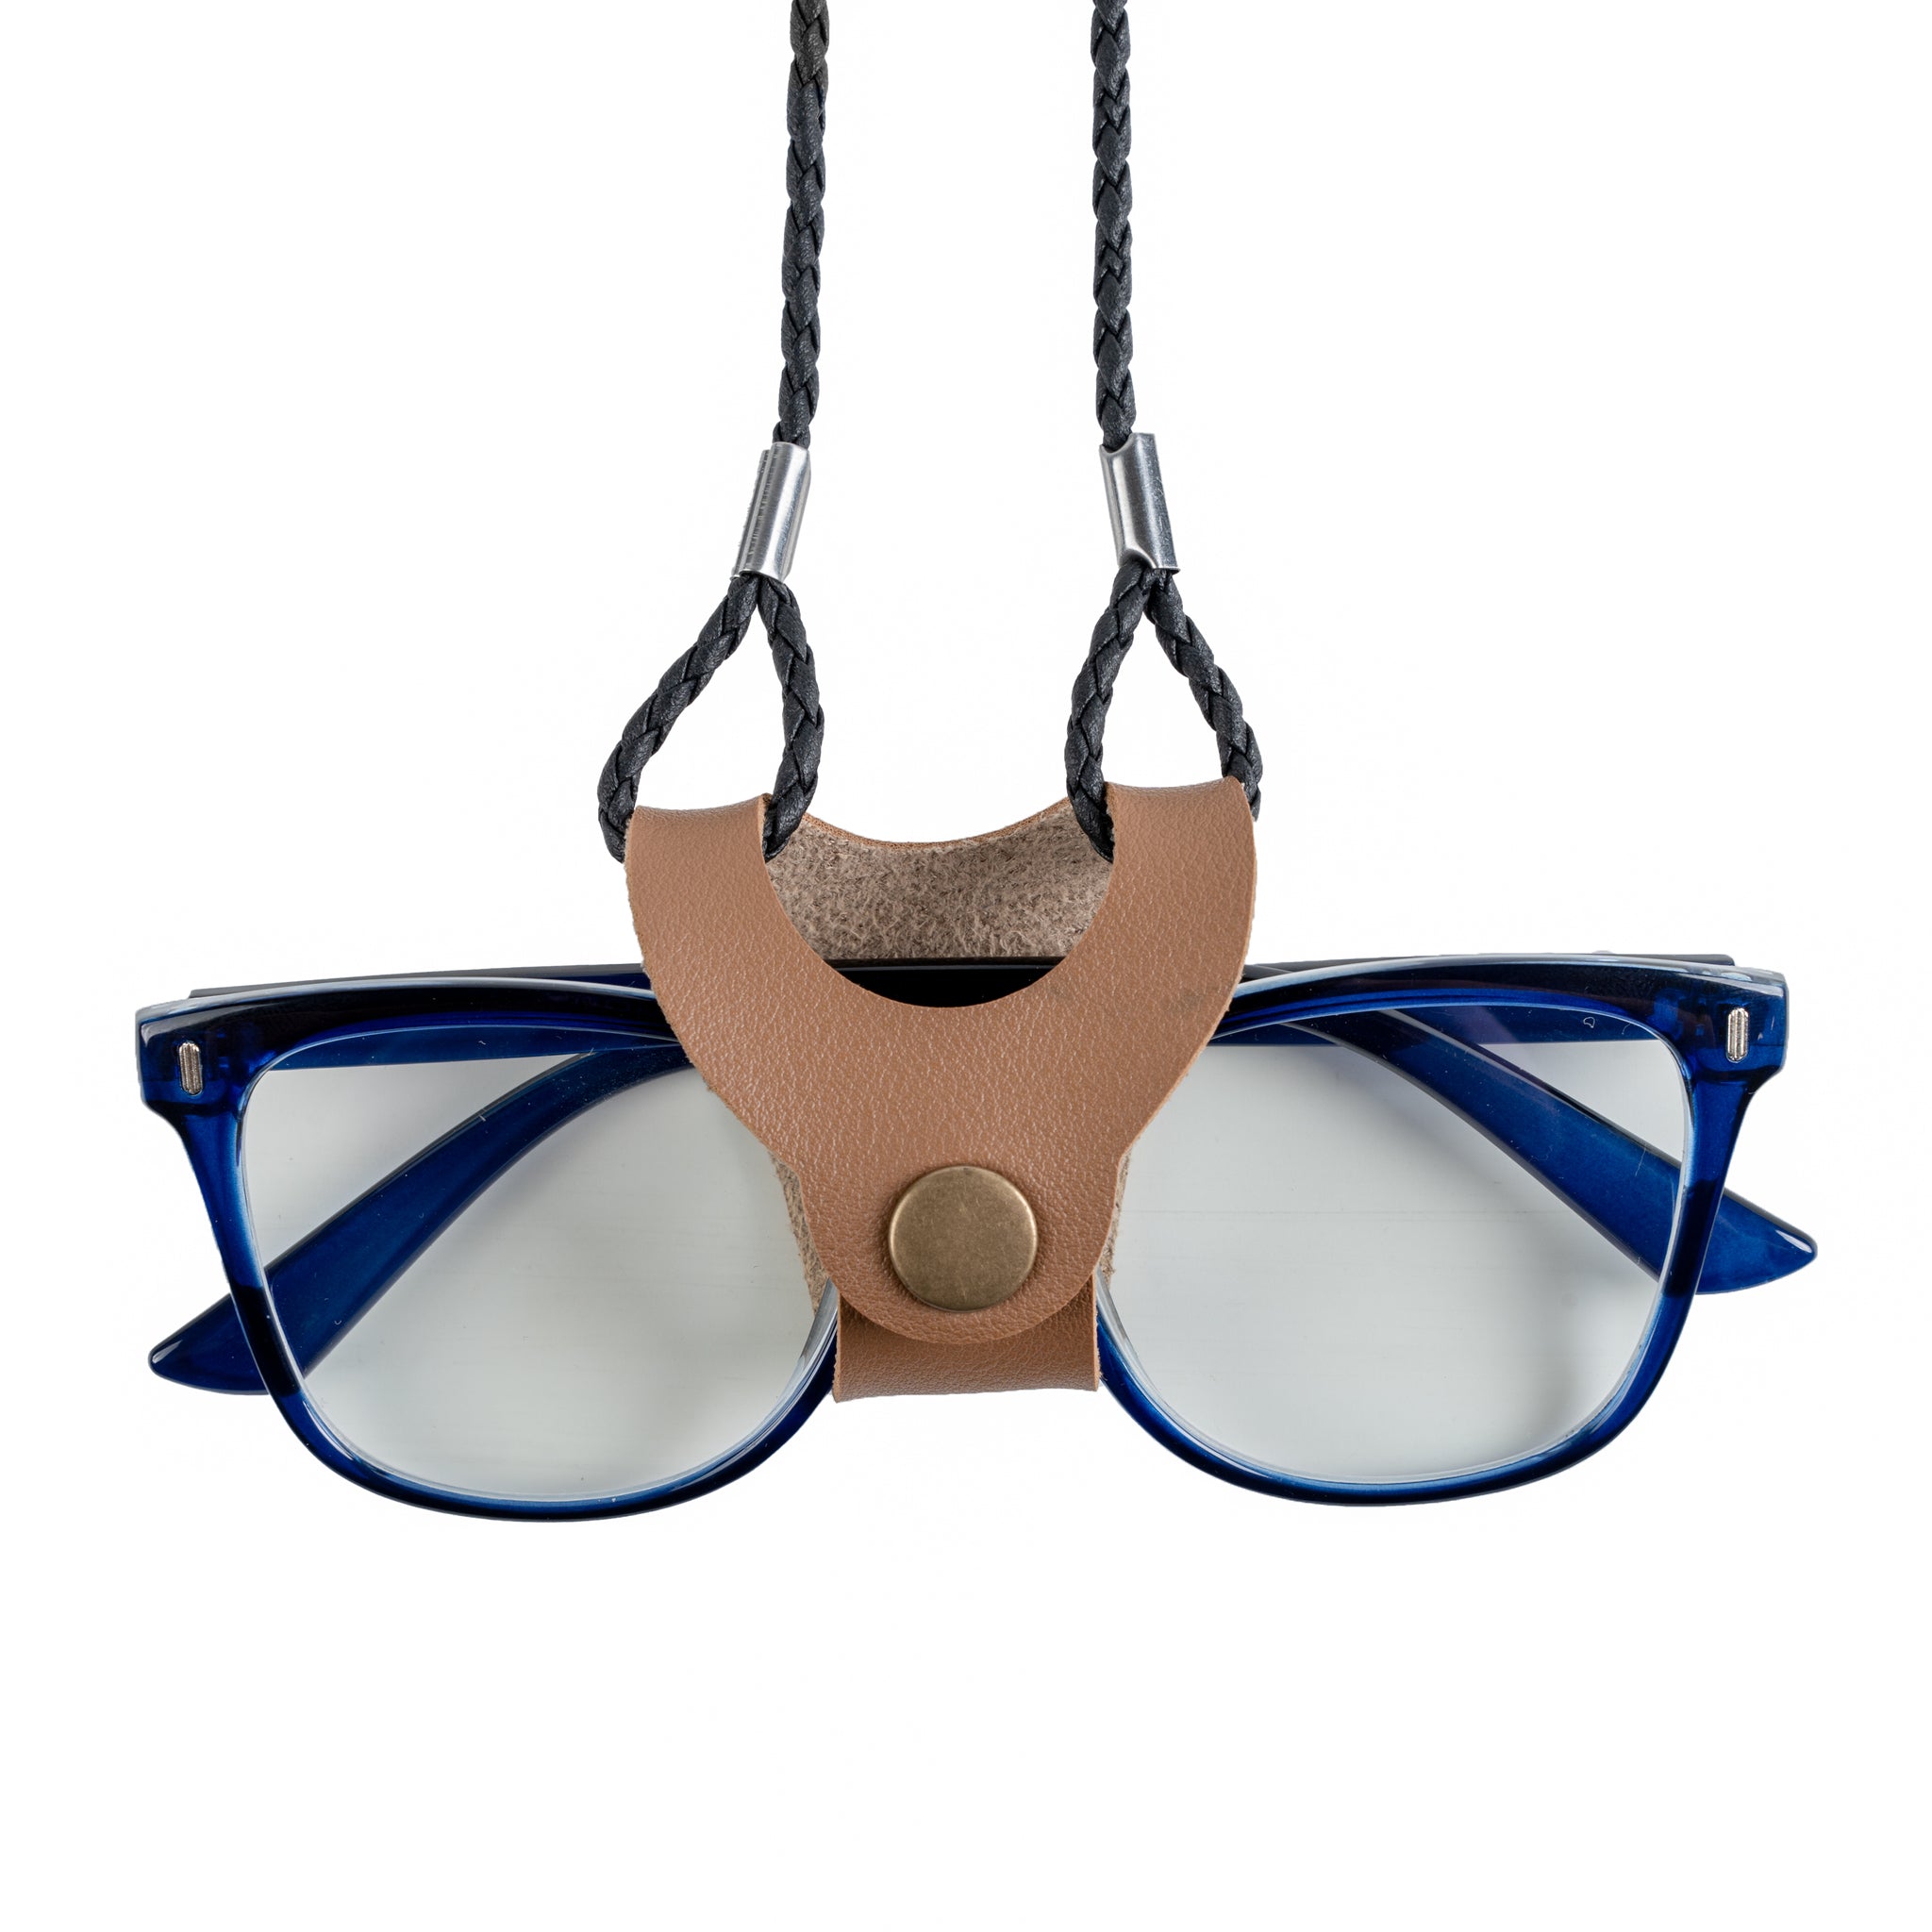 Chokore Leather Braided Eyeglass Cord/String (Brown)